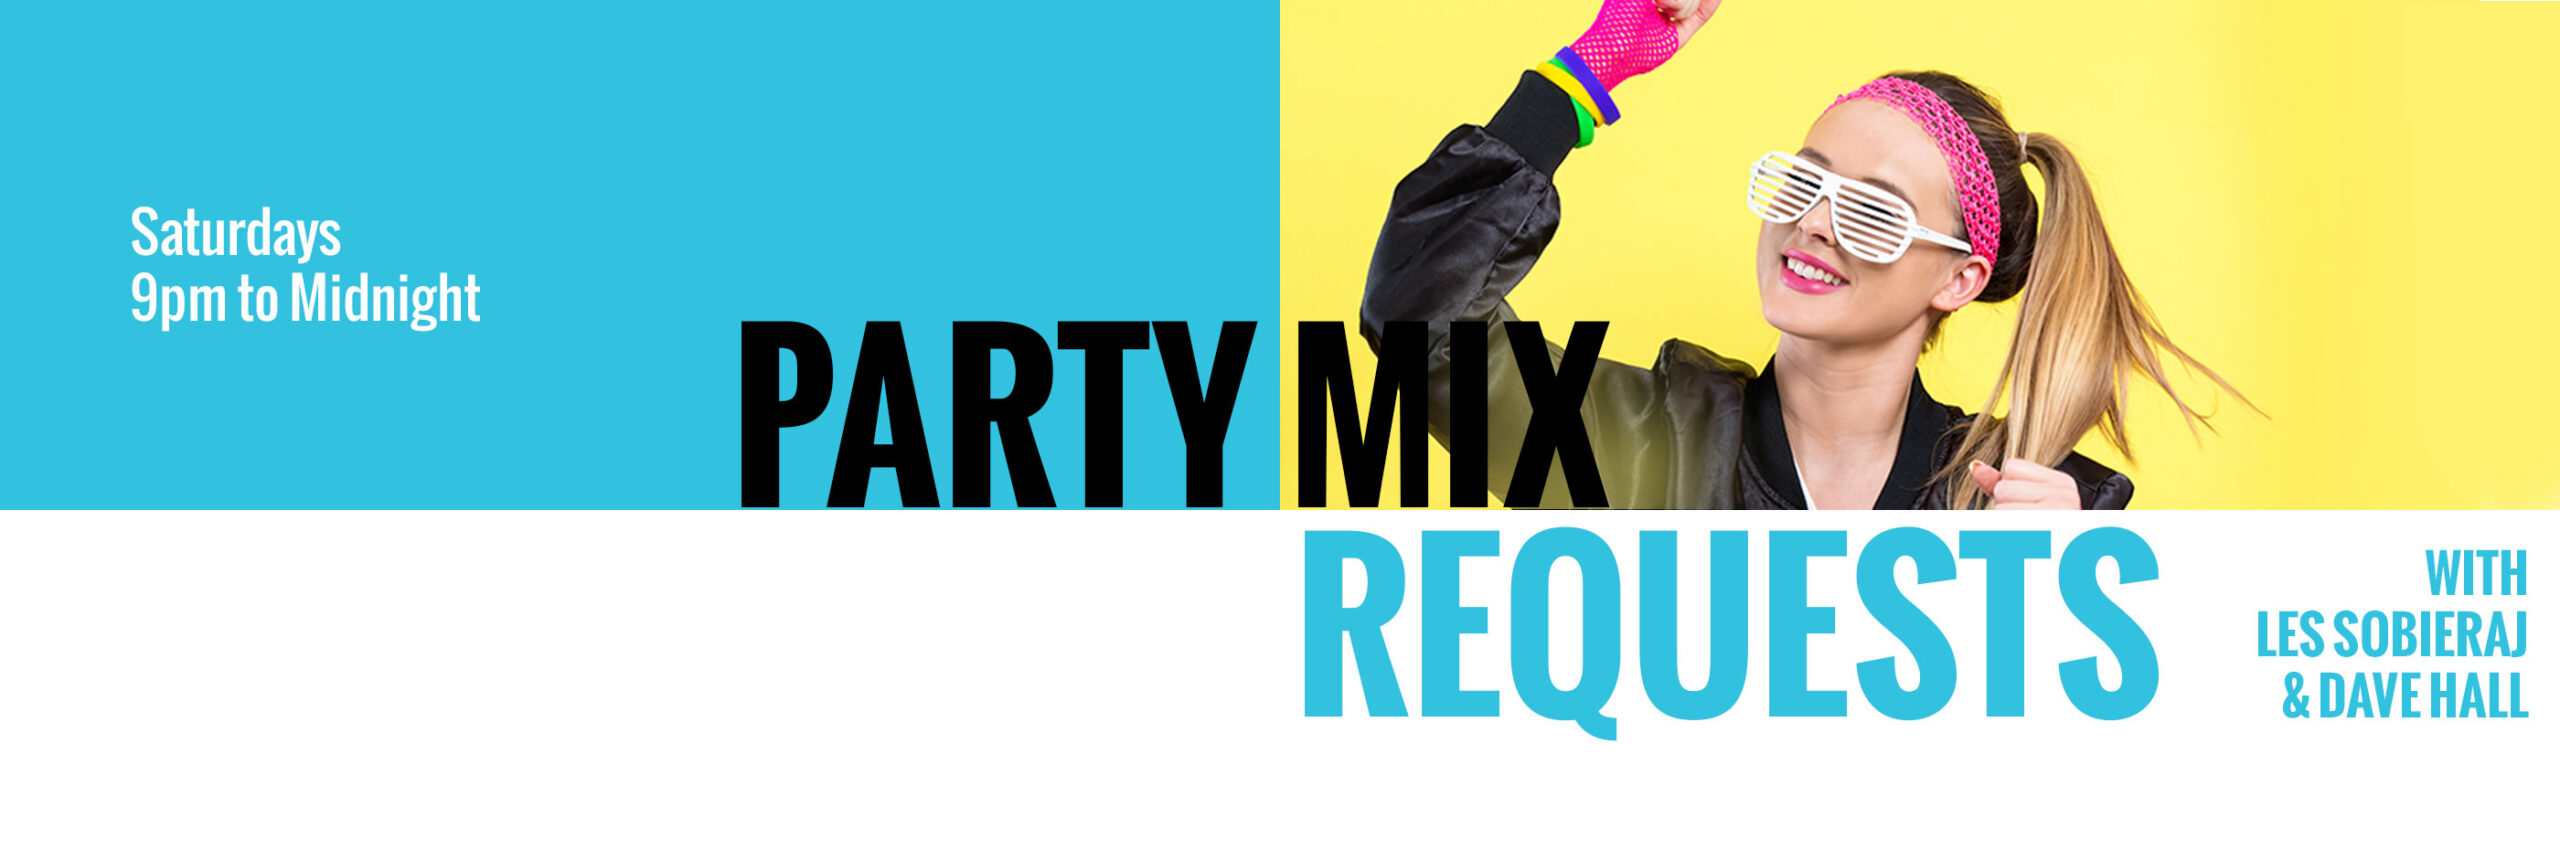 coast-header-party-mix